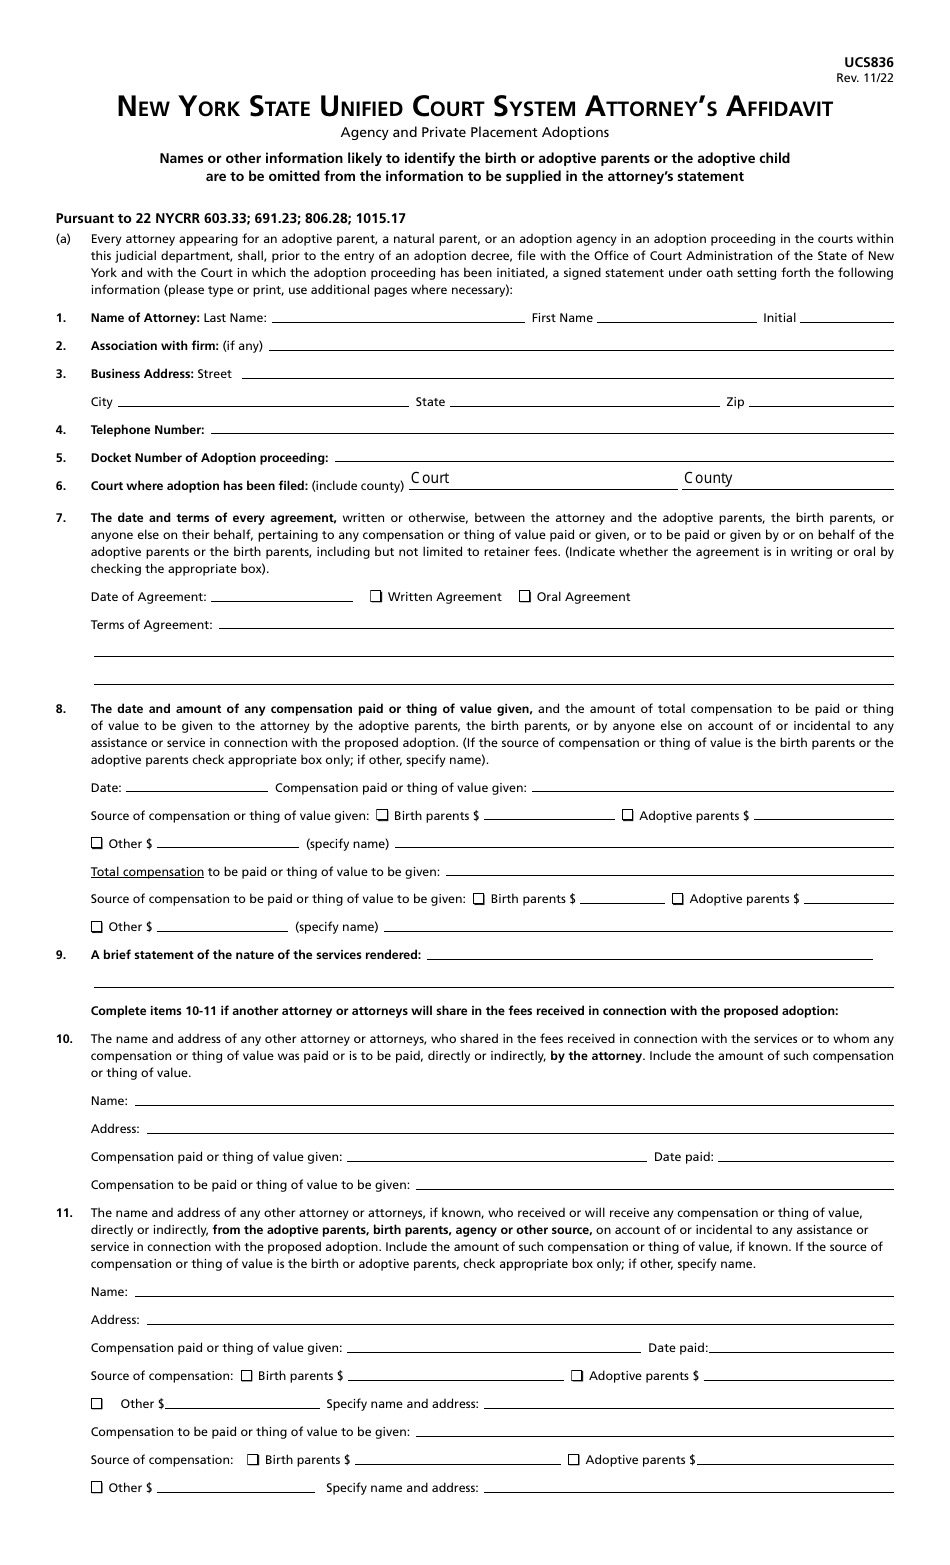 Form UCS836 Attorneys Affidavit - New York, Page 1